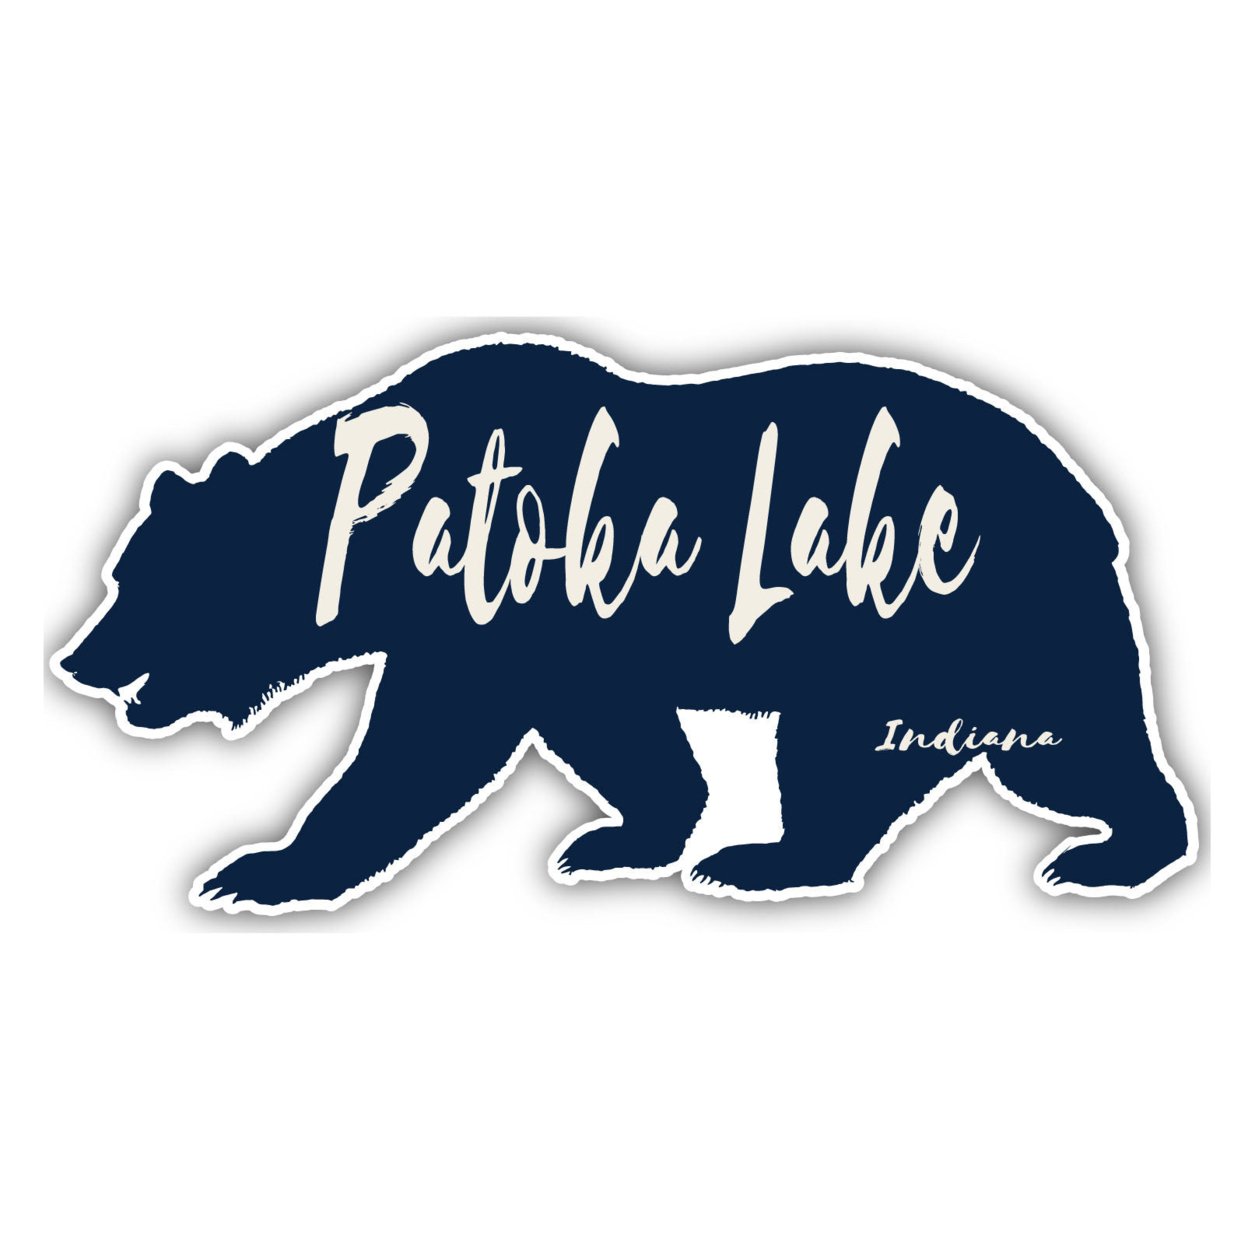 Patoka Lake Indiana Souvenir Decorative Stickers (Choose Theme And Size) - Single Unit, 4-Inch, Bear